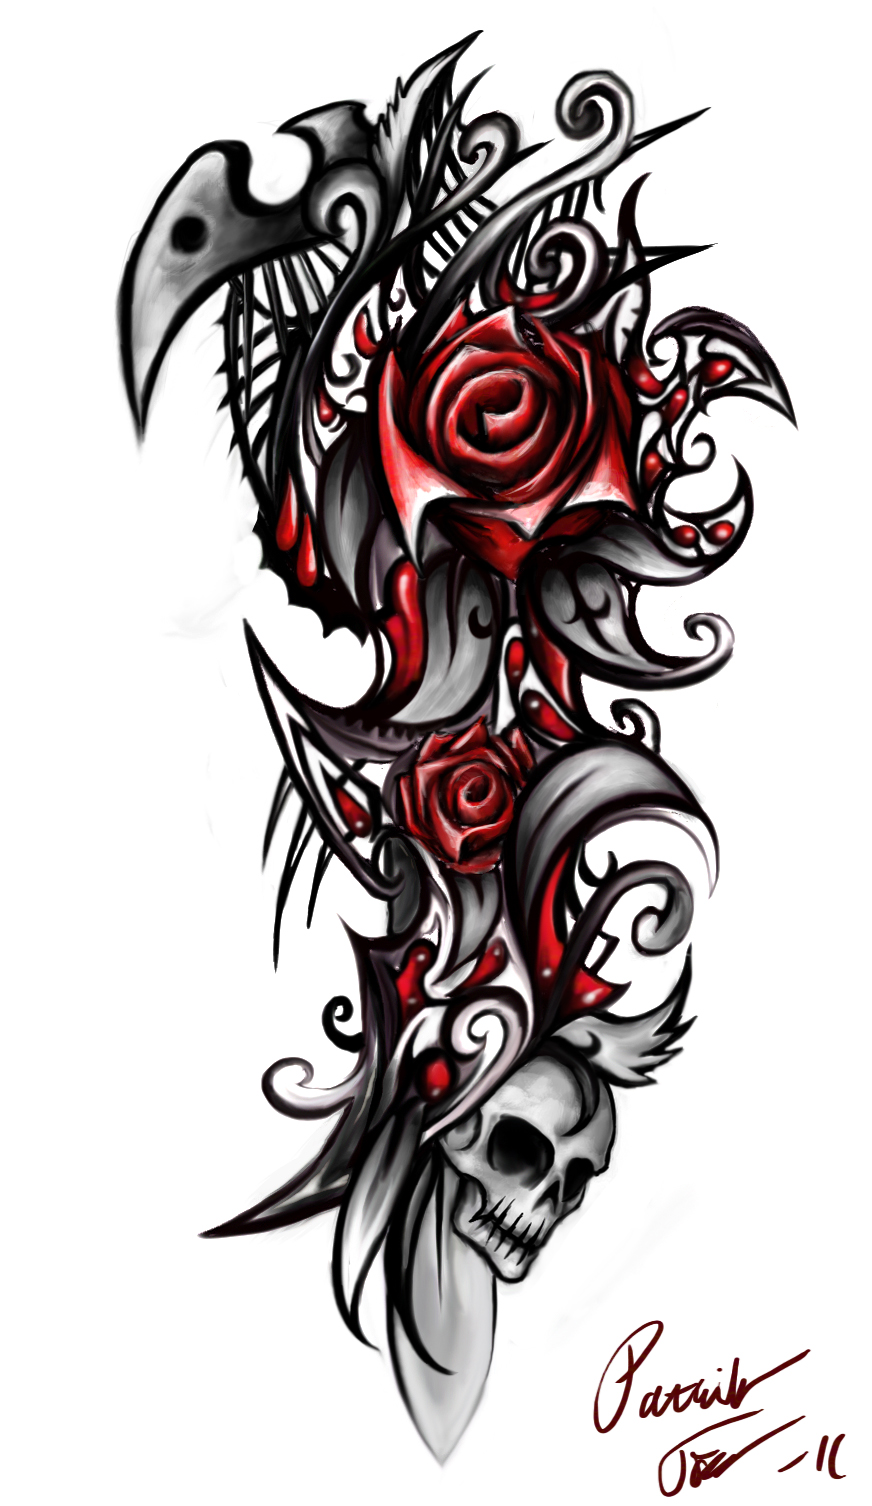 Rose skull by Patrike on